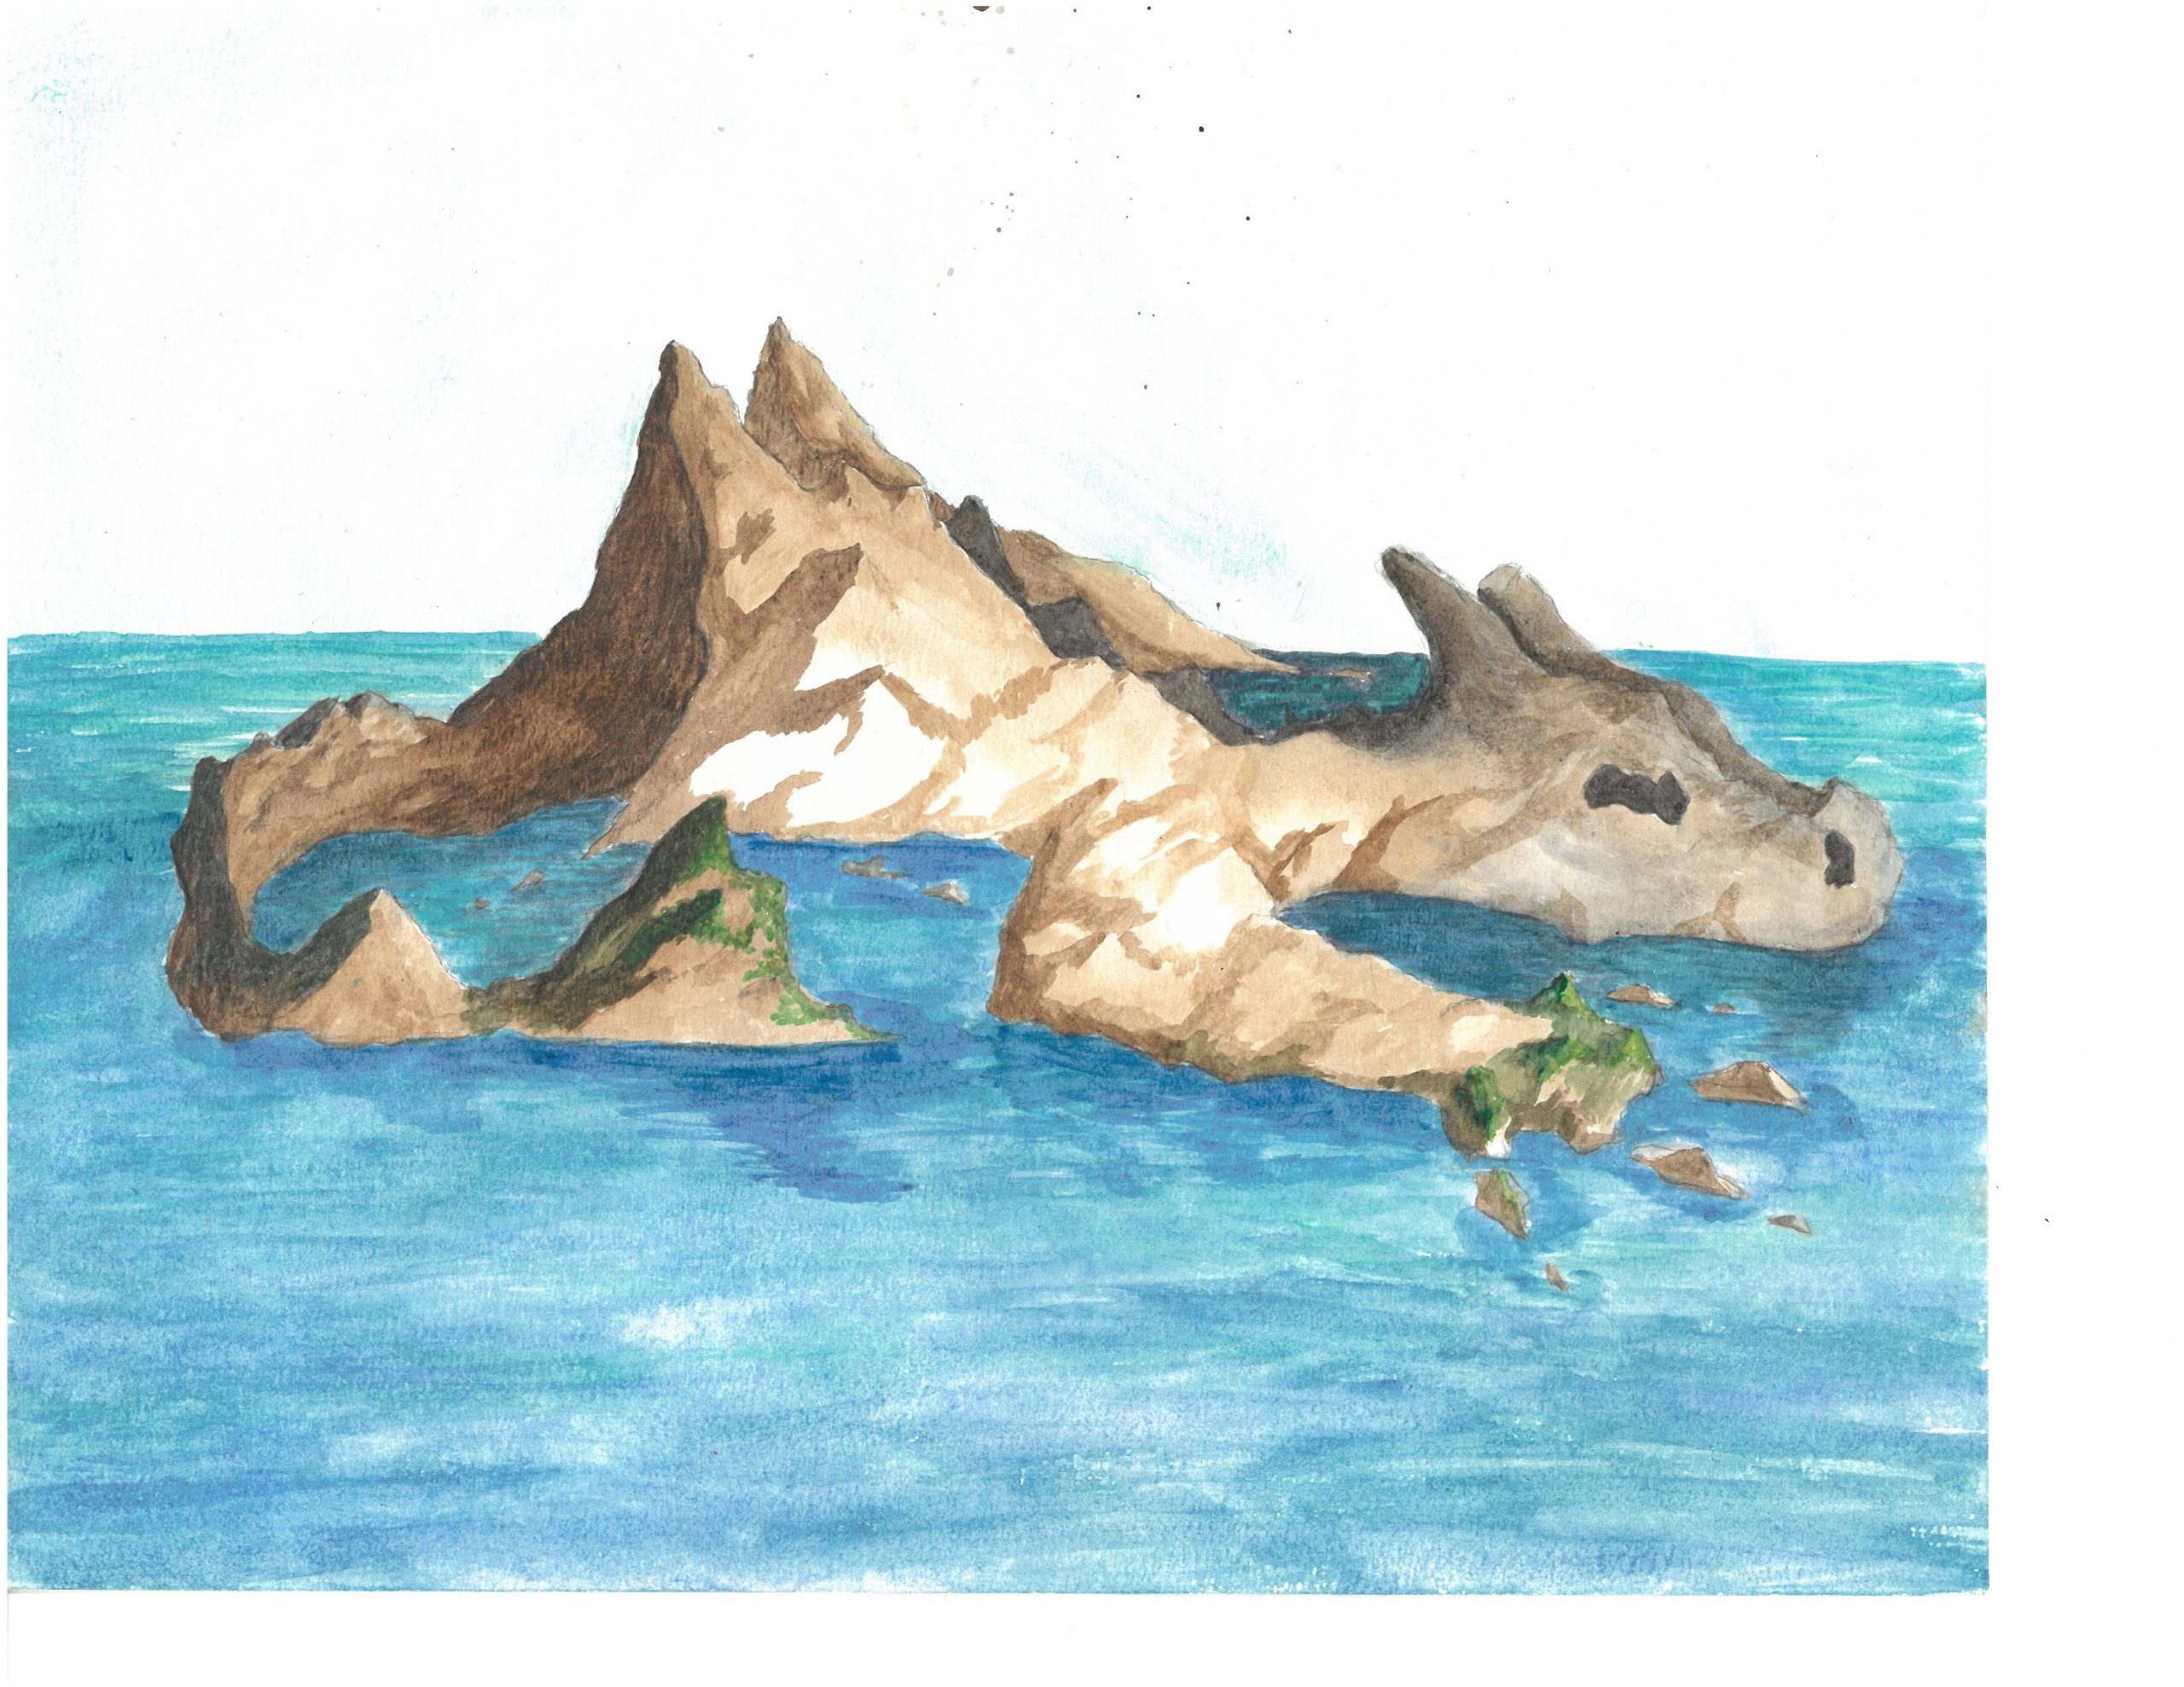 Student Surrealist Art Exhibit, The Forgotten Island  
By Michaela Farnsworth
